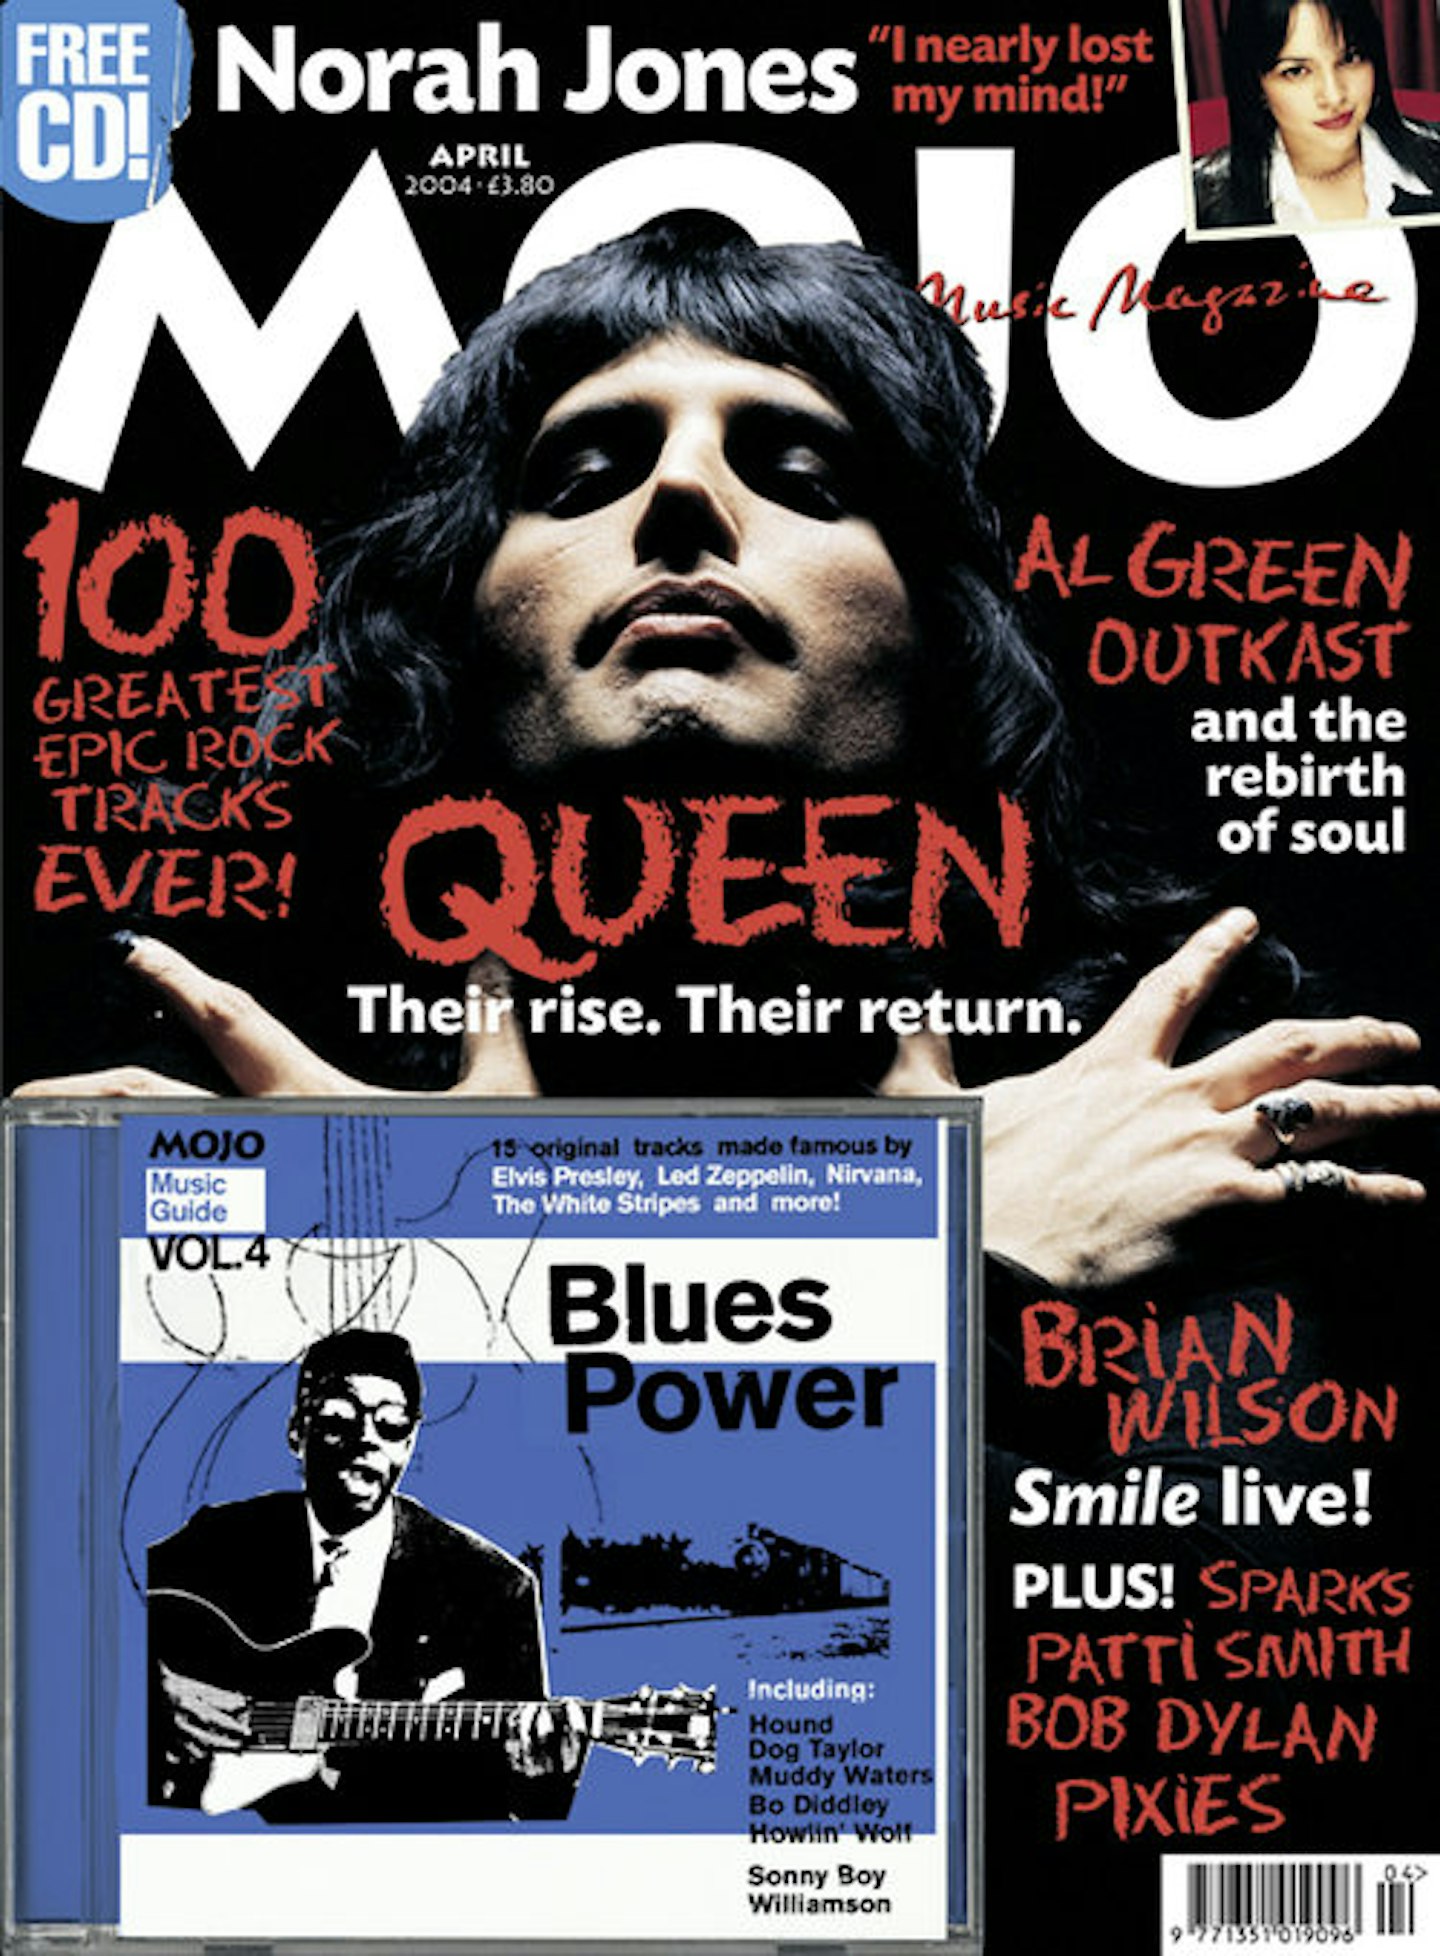 MOJO Issue 125 / April 2004